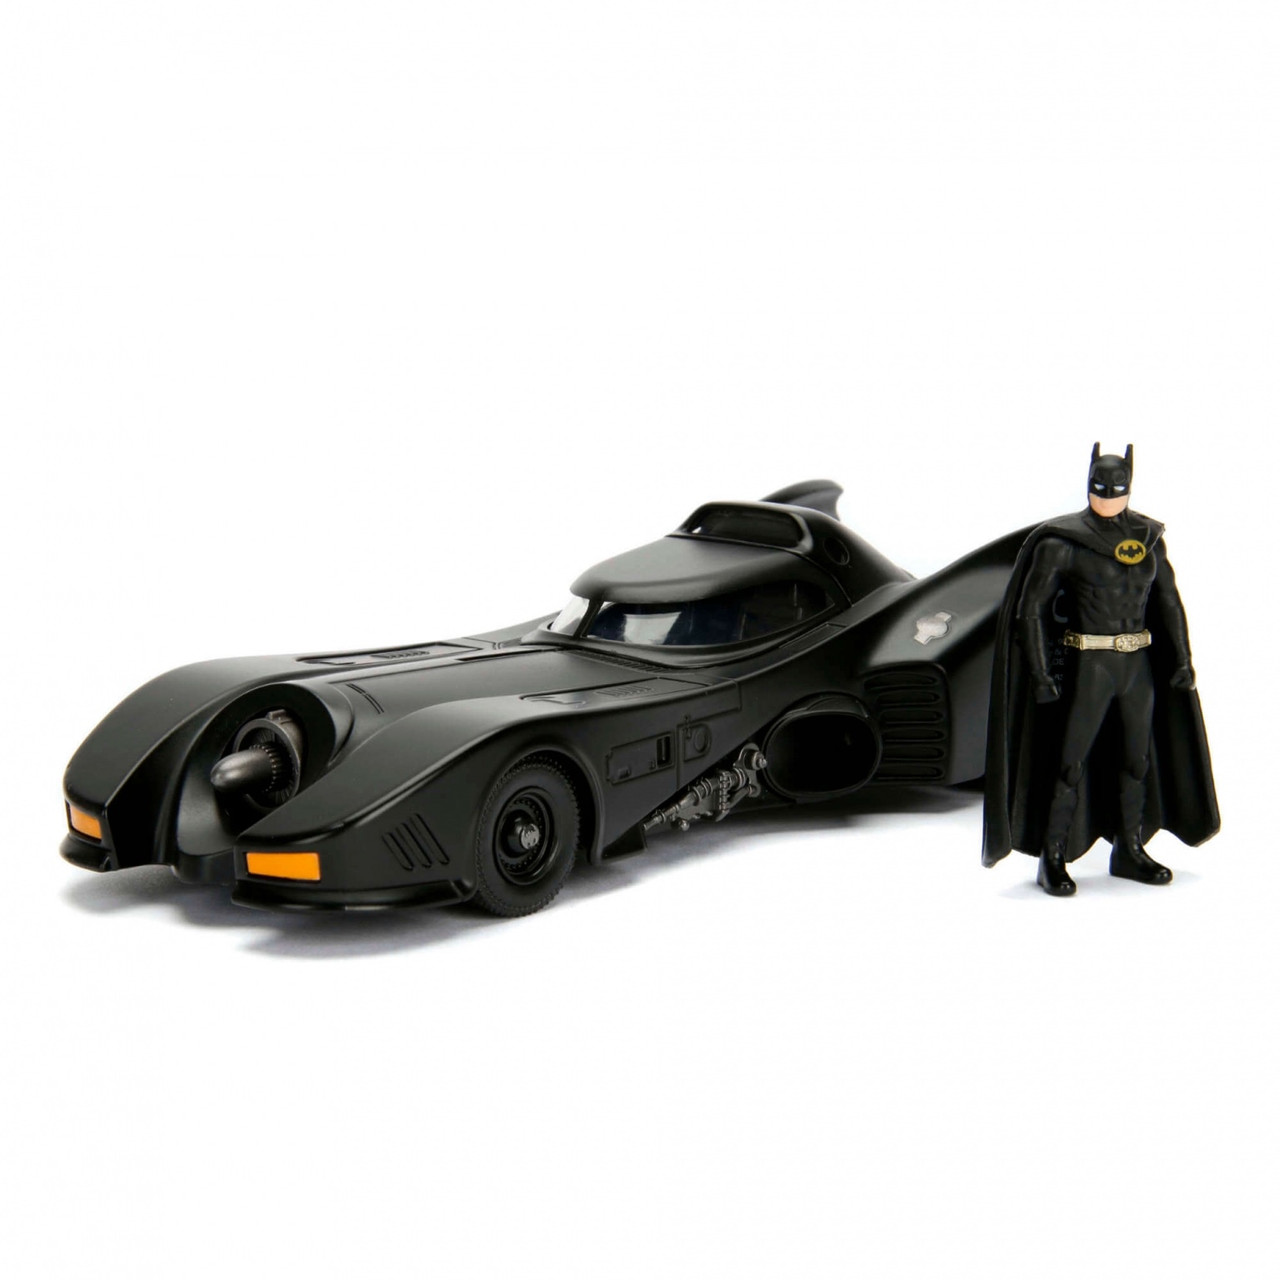 Batman the Animated Series – Batmobile with Figure (1:24)